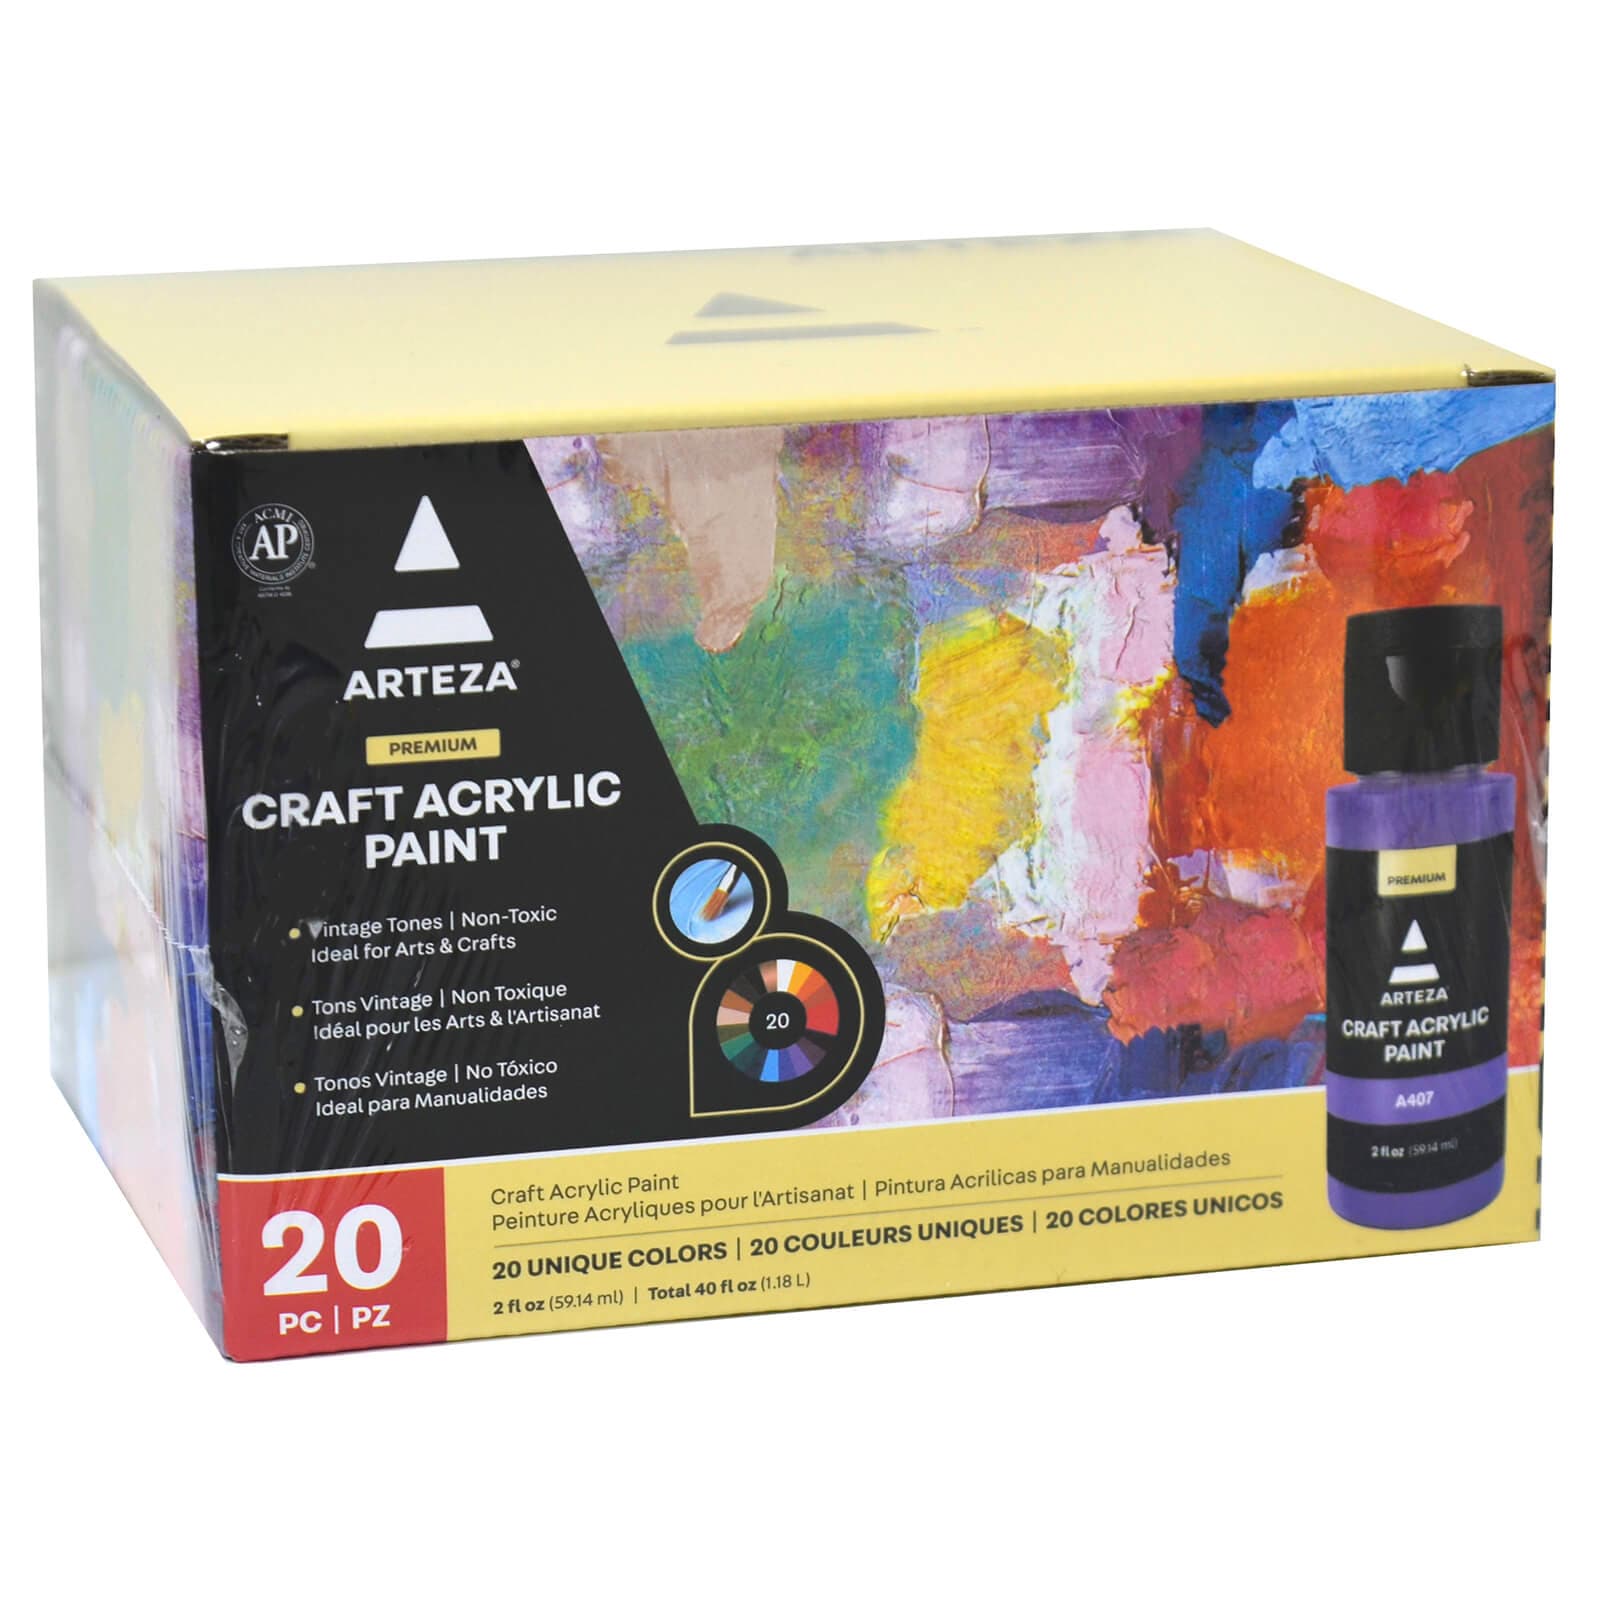 Arteza Set Of 20 Craft Acrylic Paint Premium Bottles